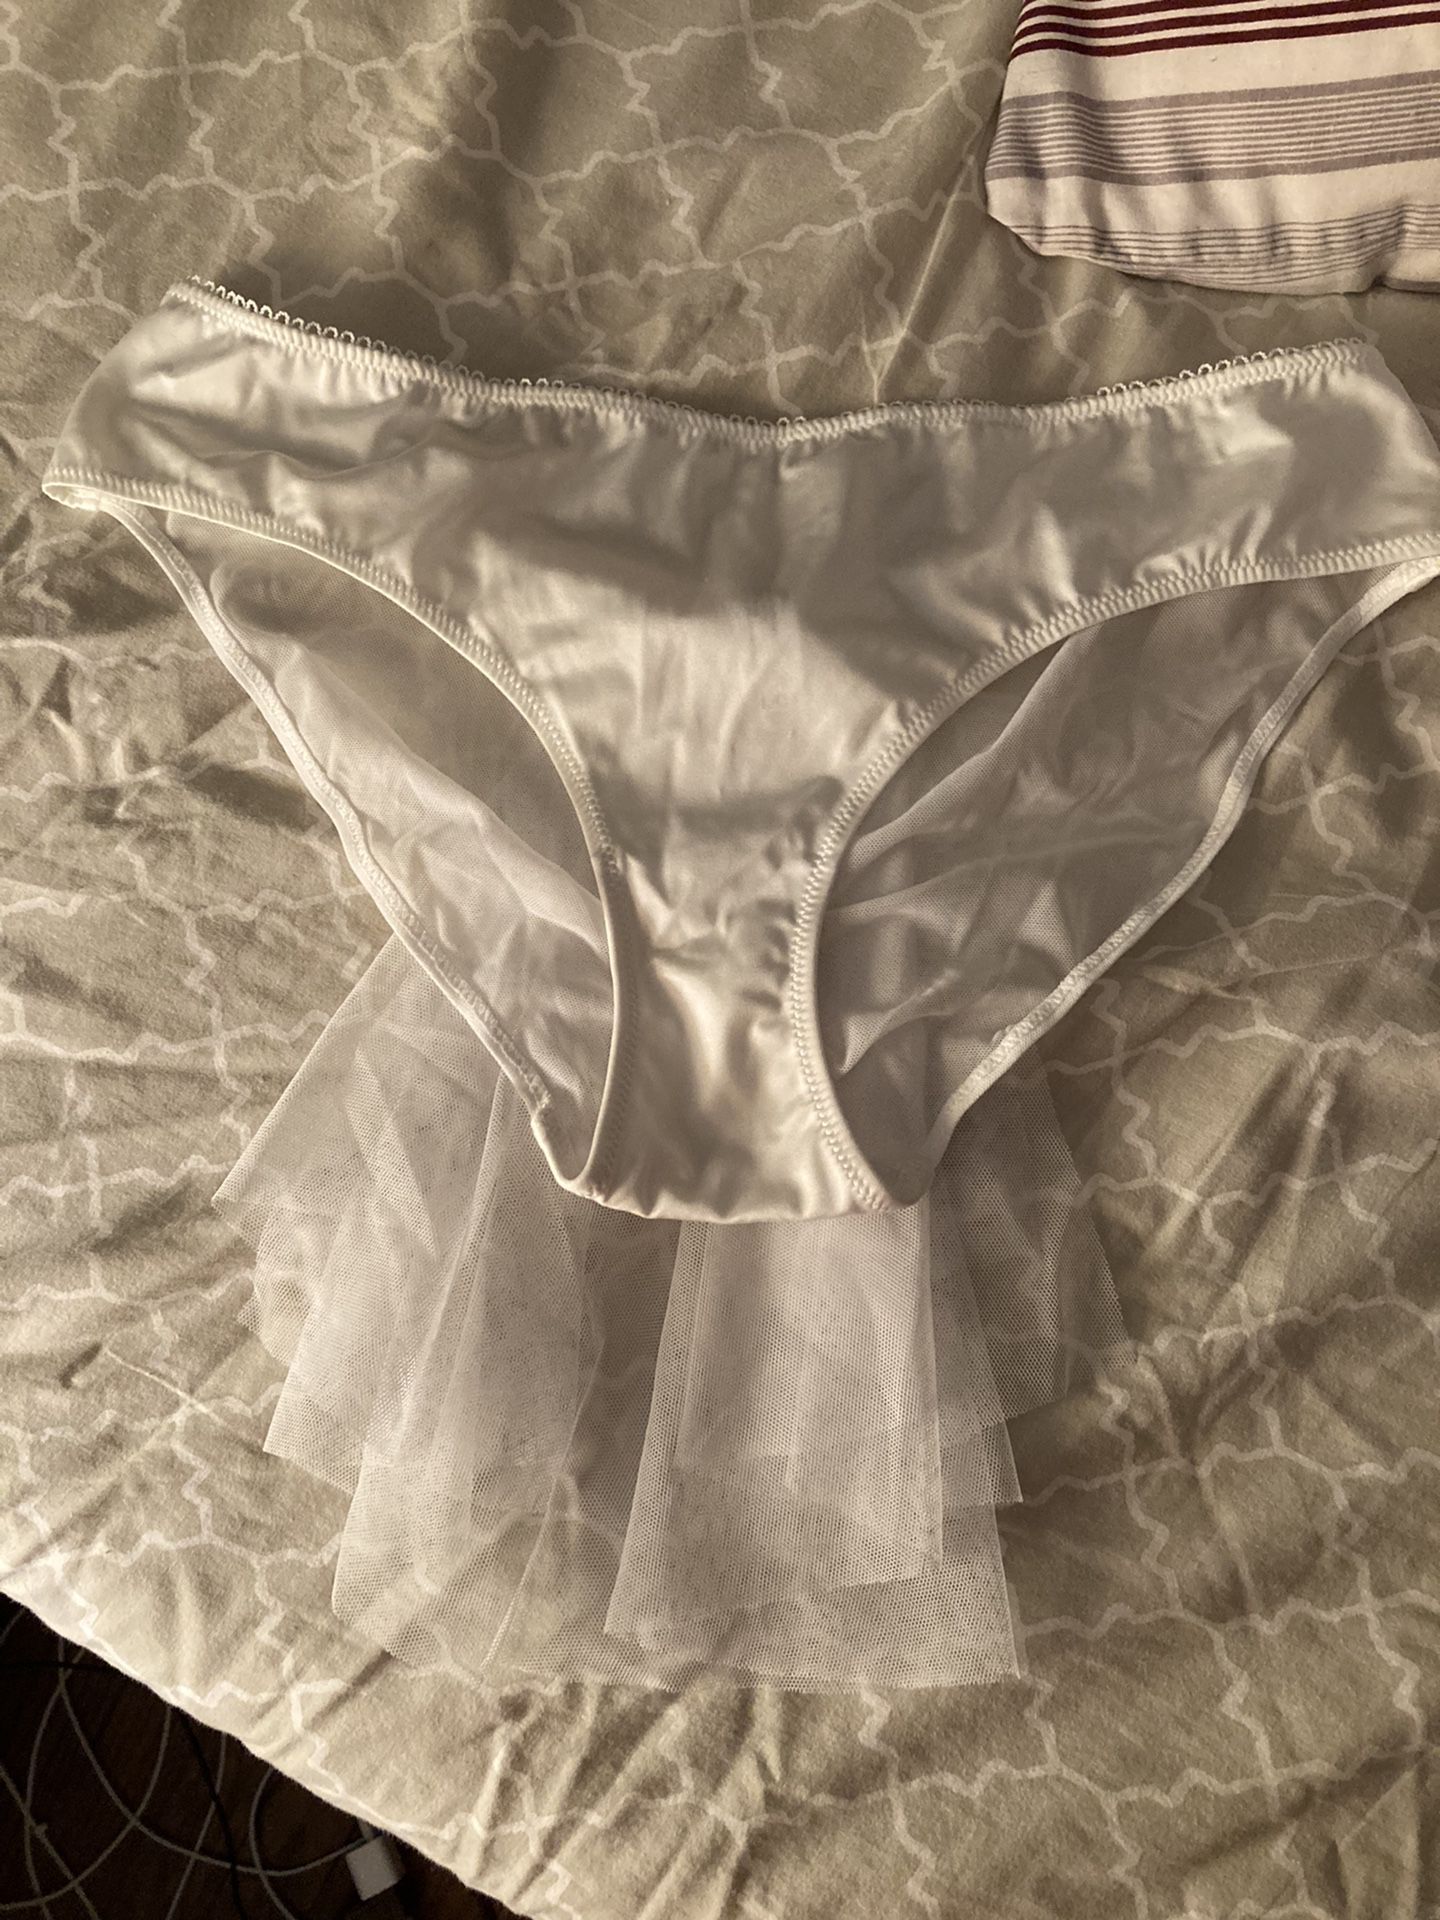 Bridal lingerie